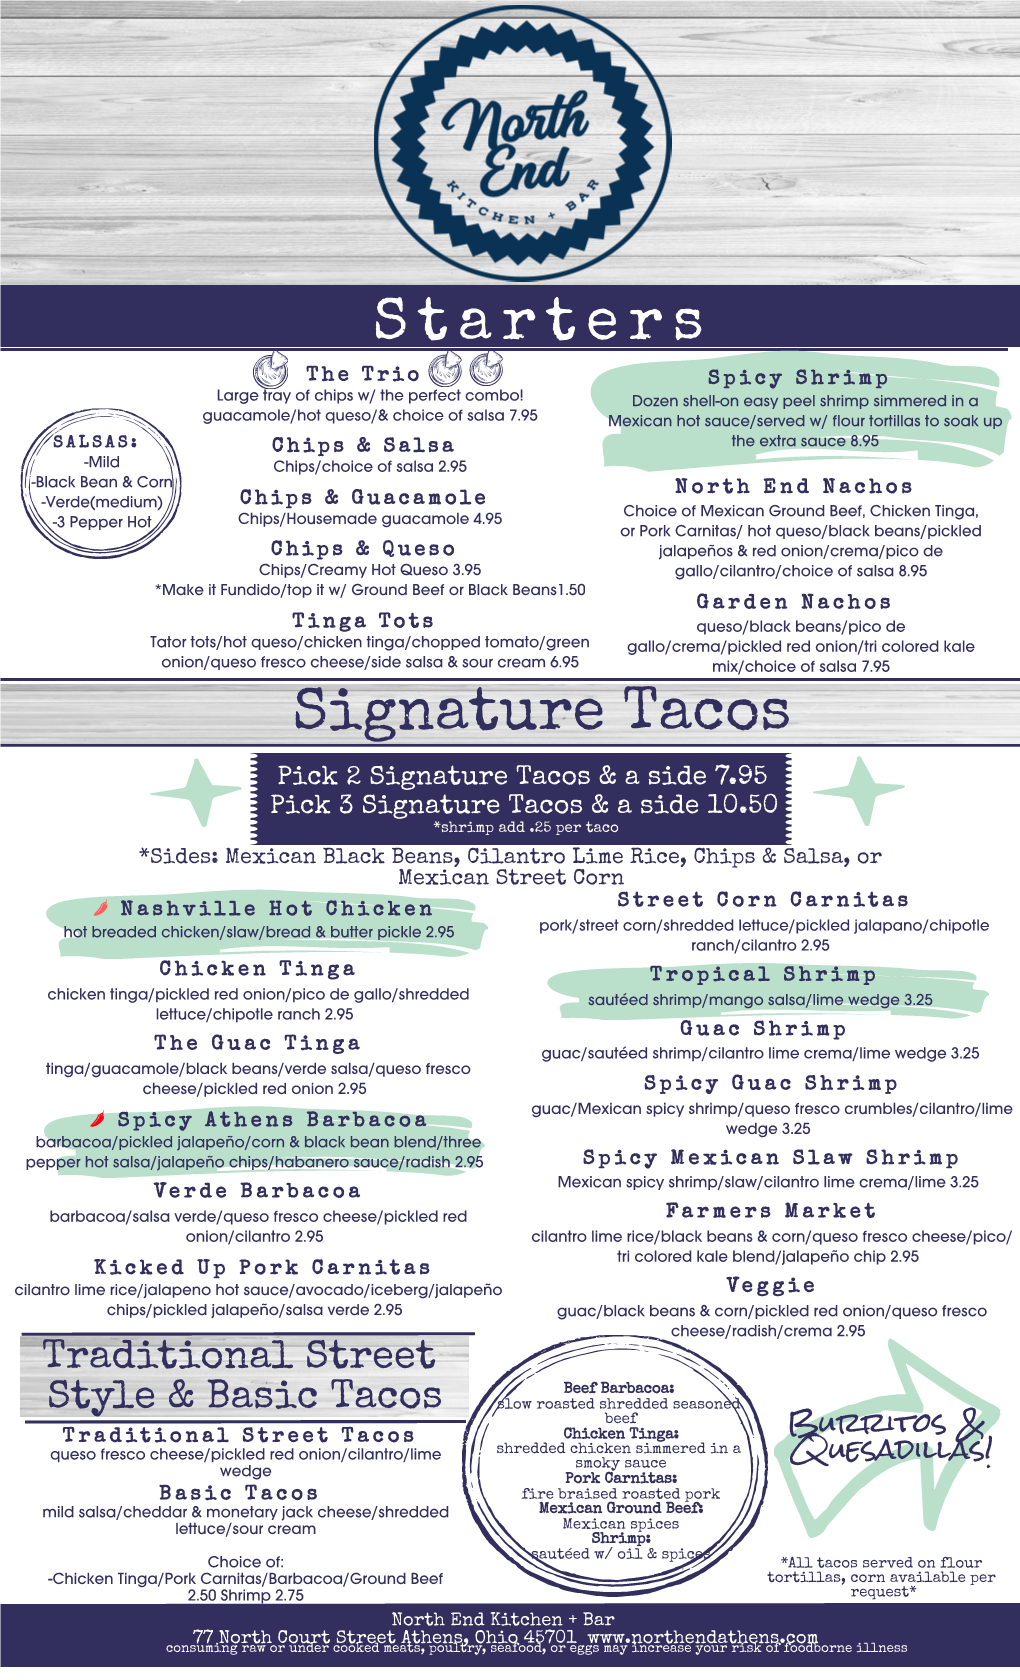 Signature Tacos Starters